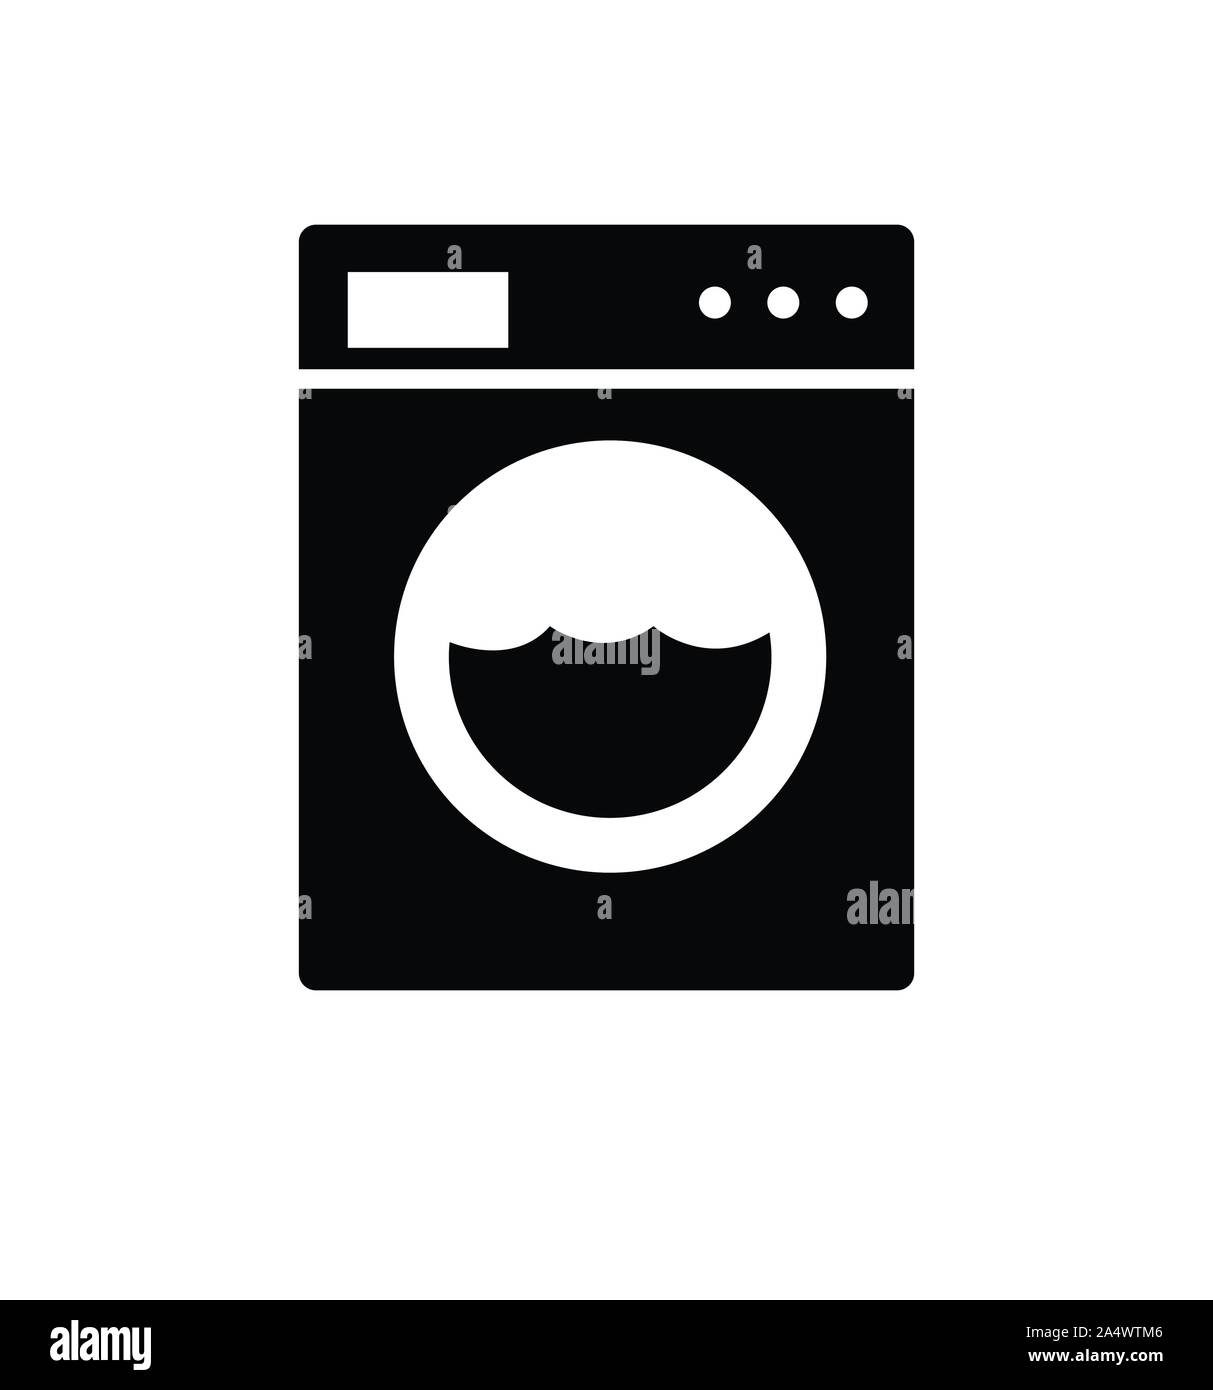 Washing machine icon appliances symbol flat isolated Stock Vector